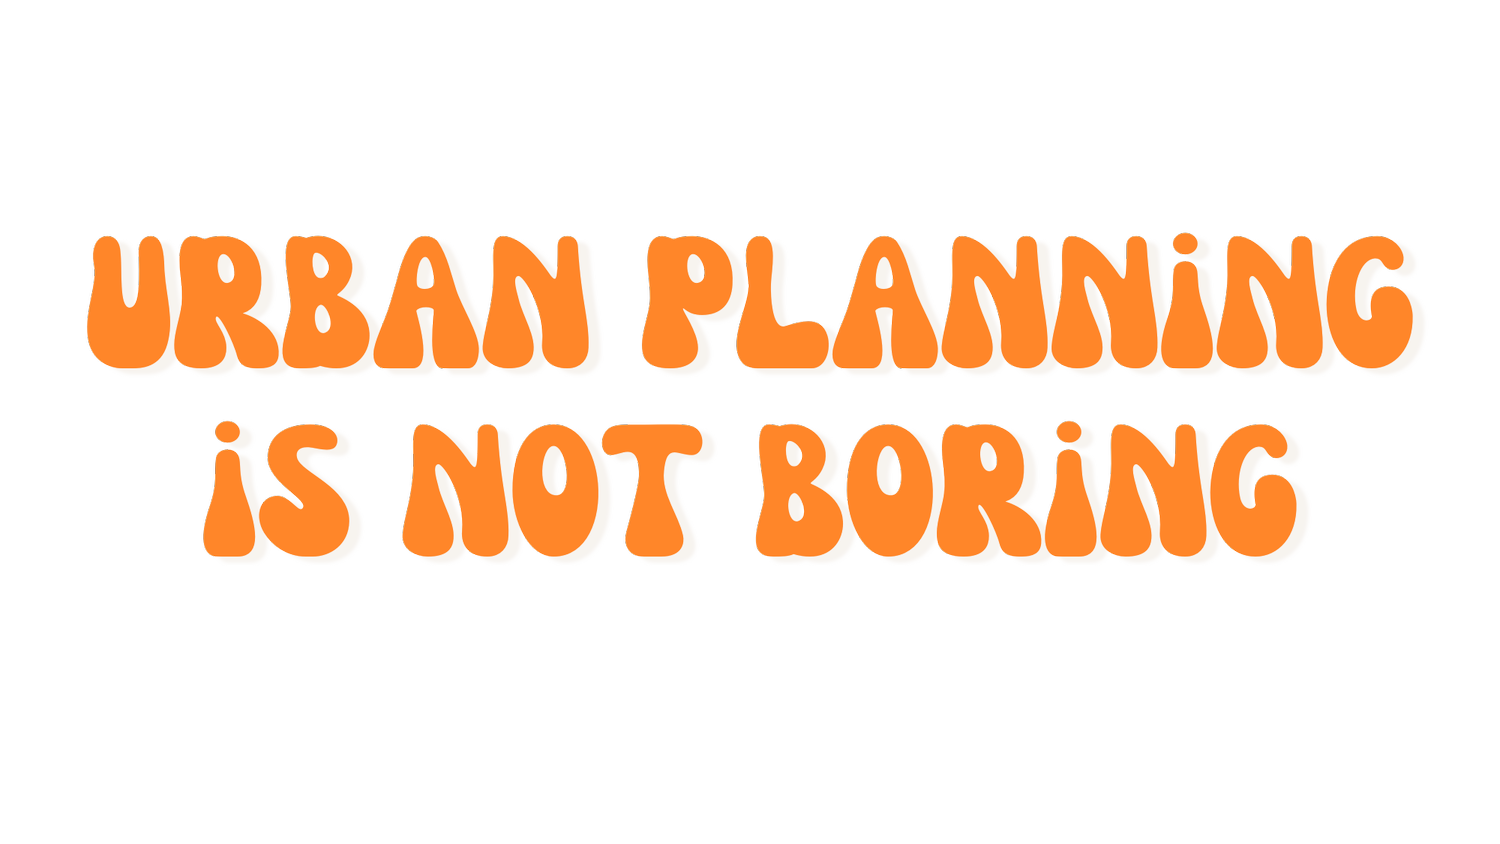 Urban Planning is Not Boring